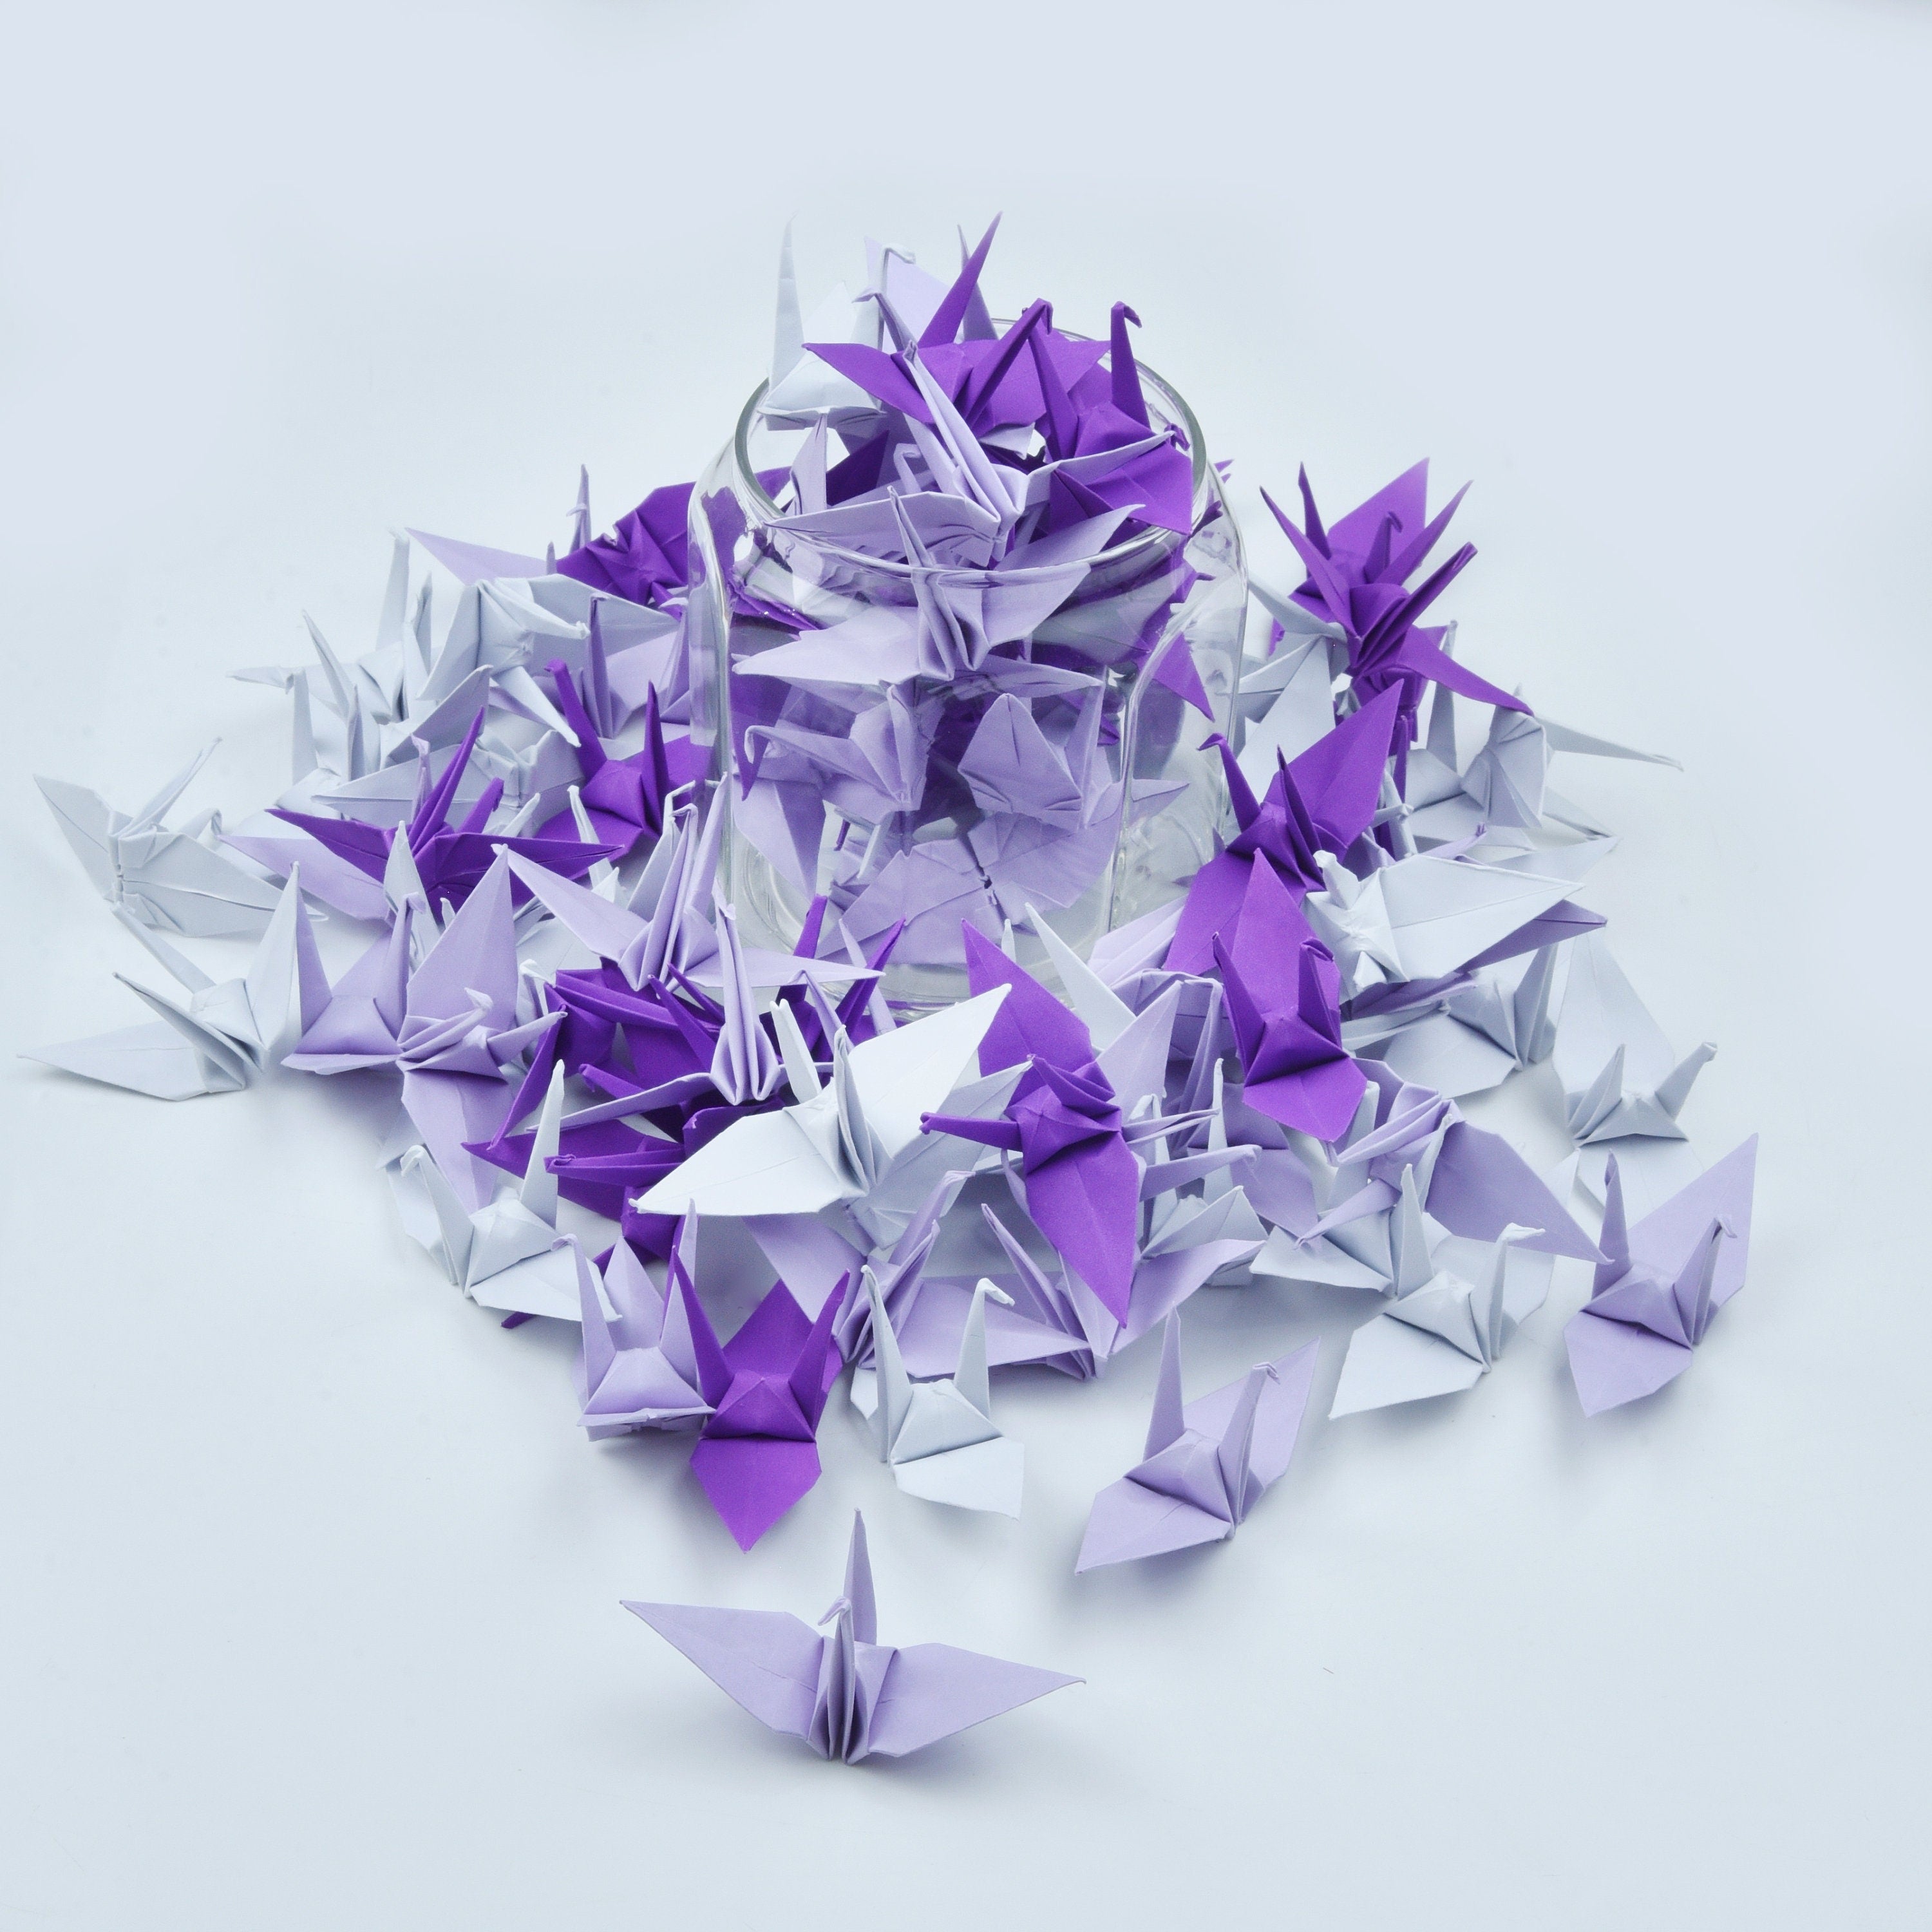 100 Origami Paper Crane Purple Shade Tone 3x3 inches for Wedding Decor, Anniversary Gift, Valentines, Backdrop